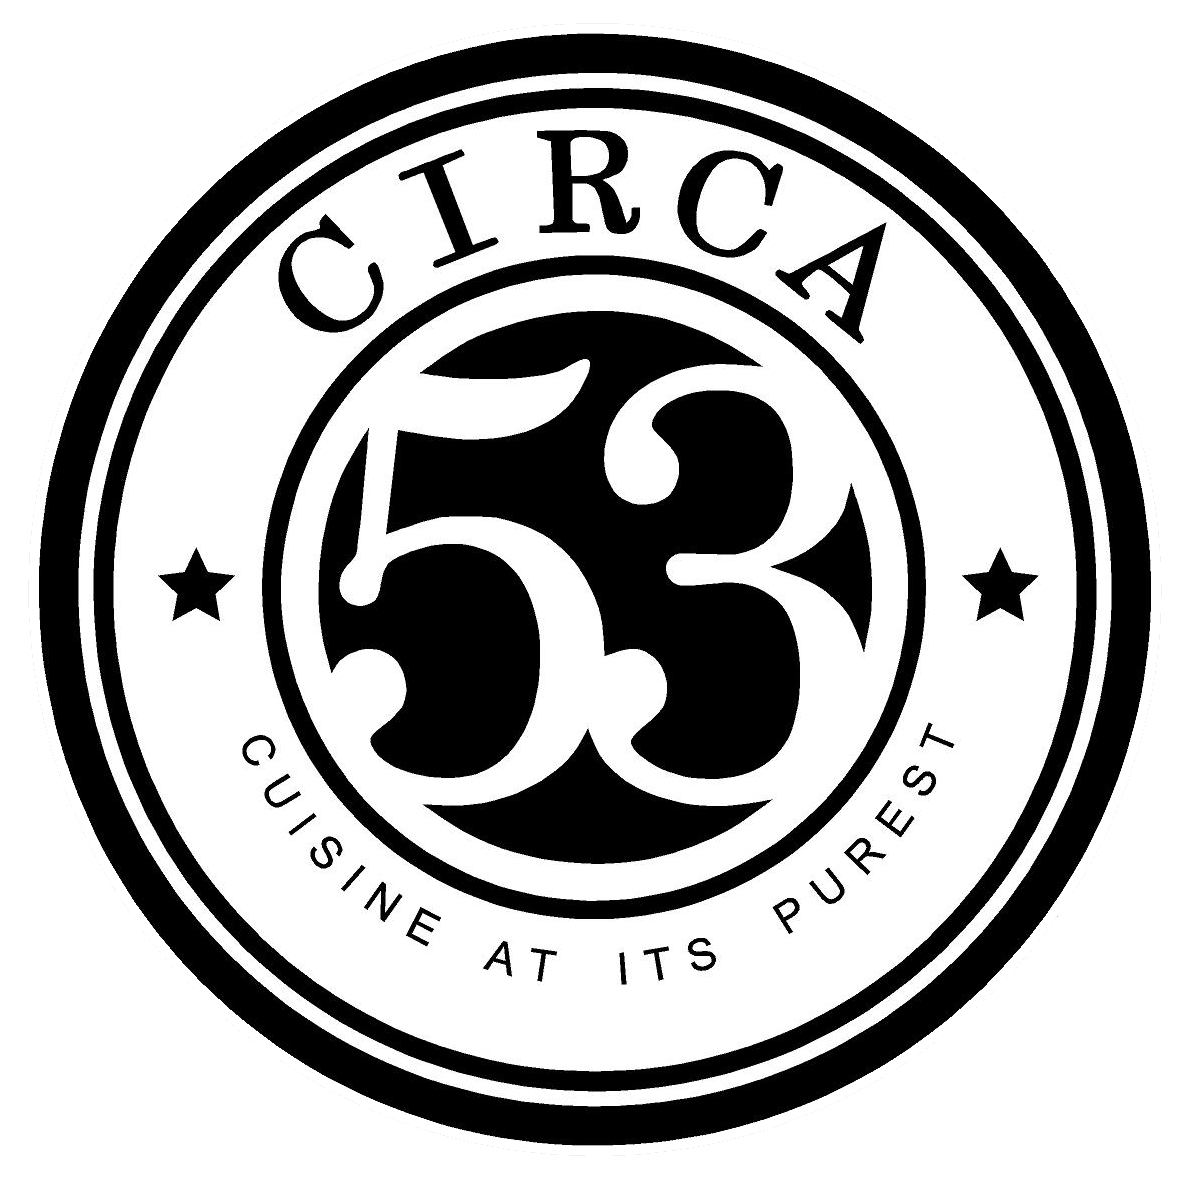 Circa53 Catering